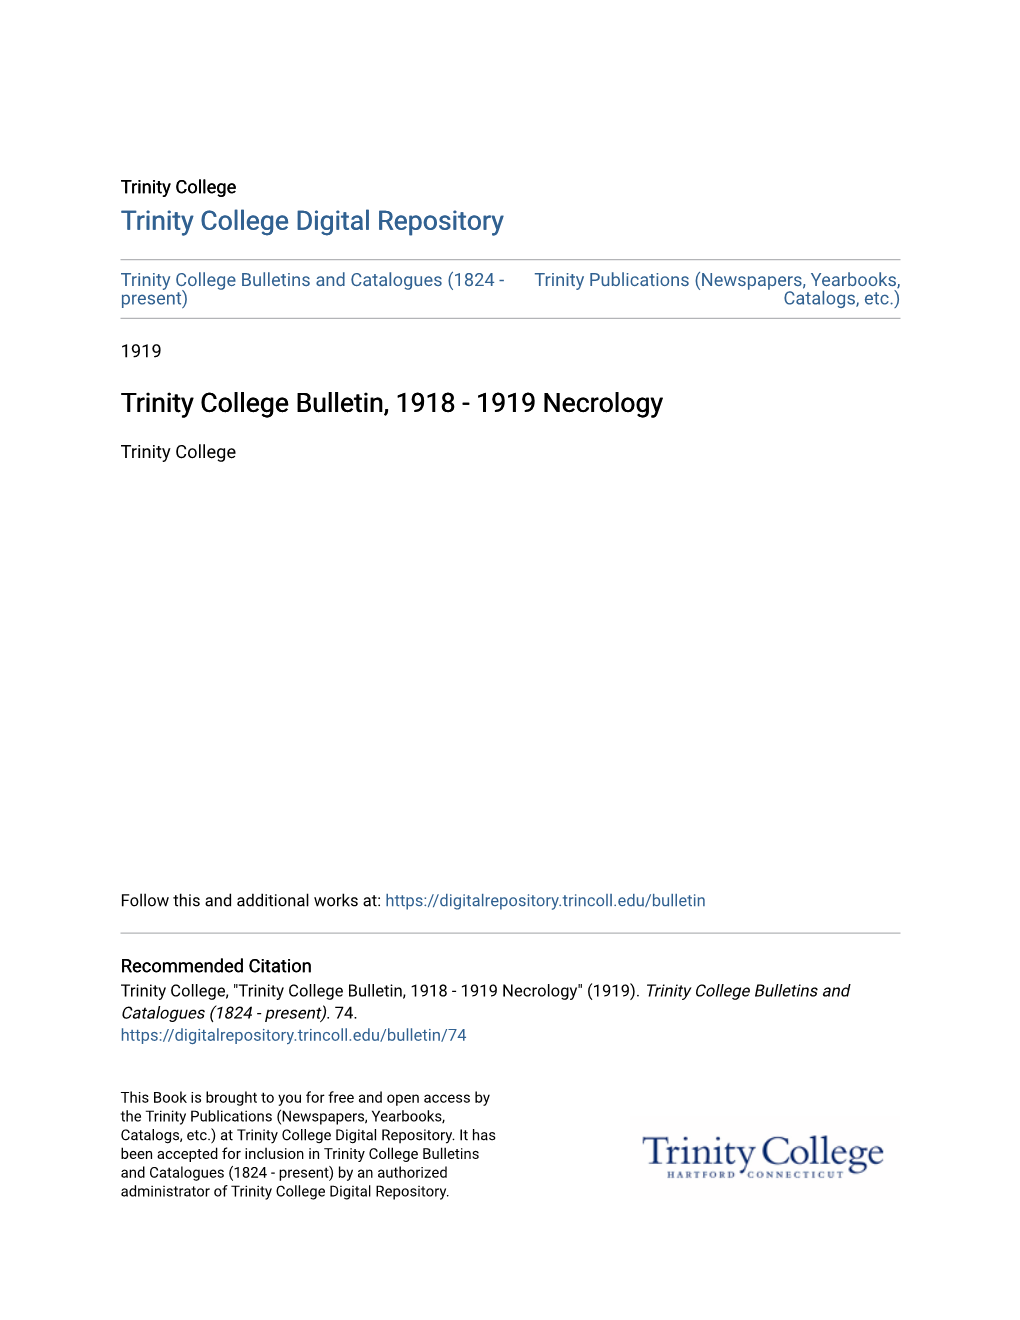 Trinity College Bulletin, 1918 - 1919 Necrology